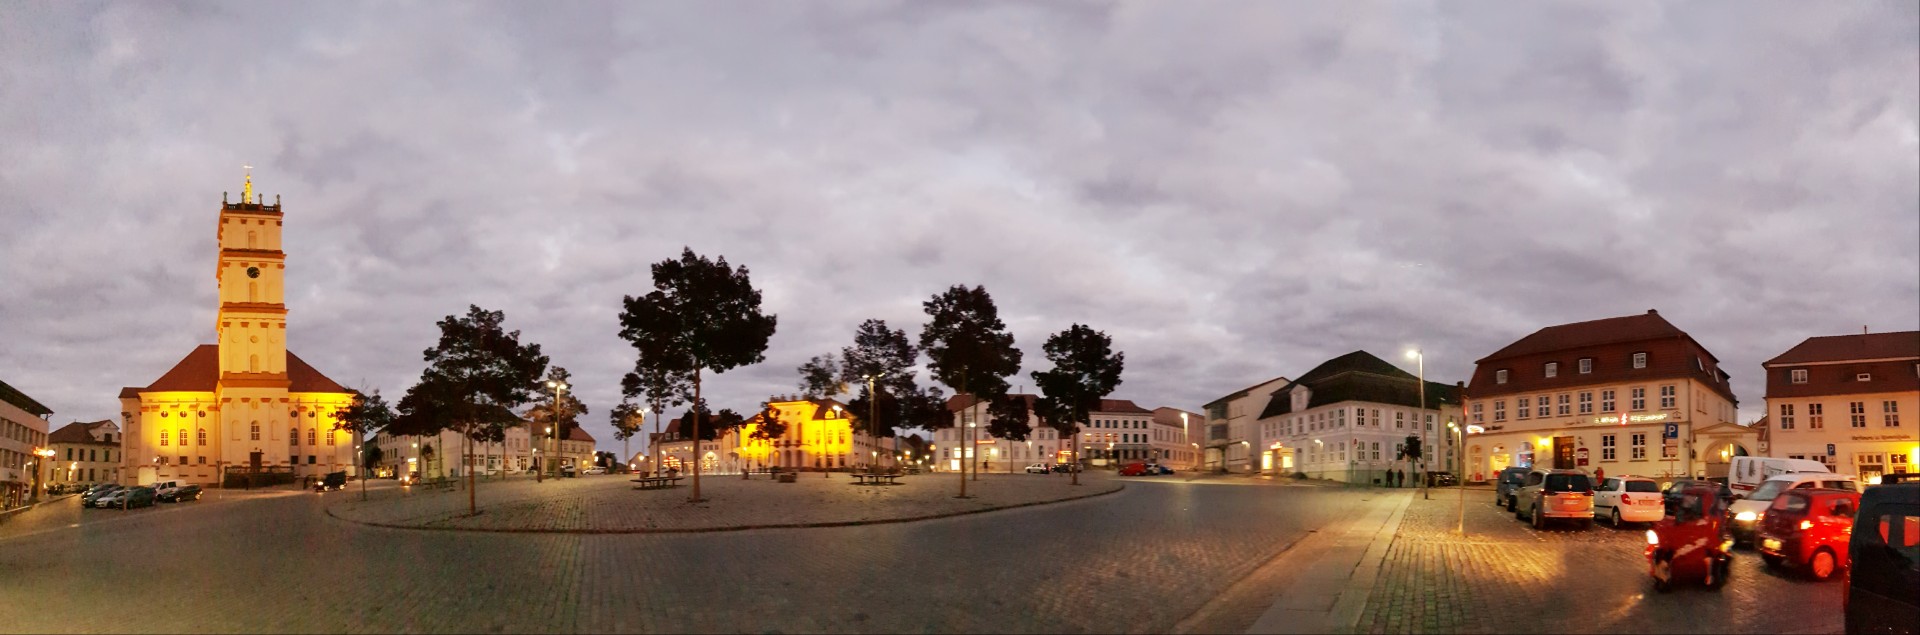 Neustrelitz Marktplatz